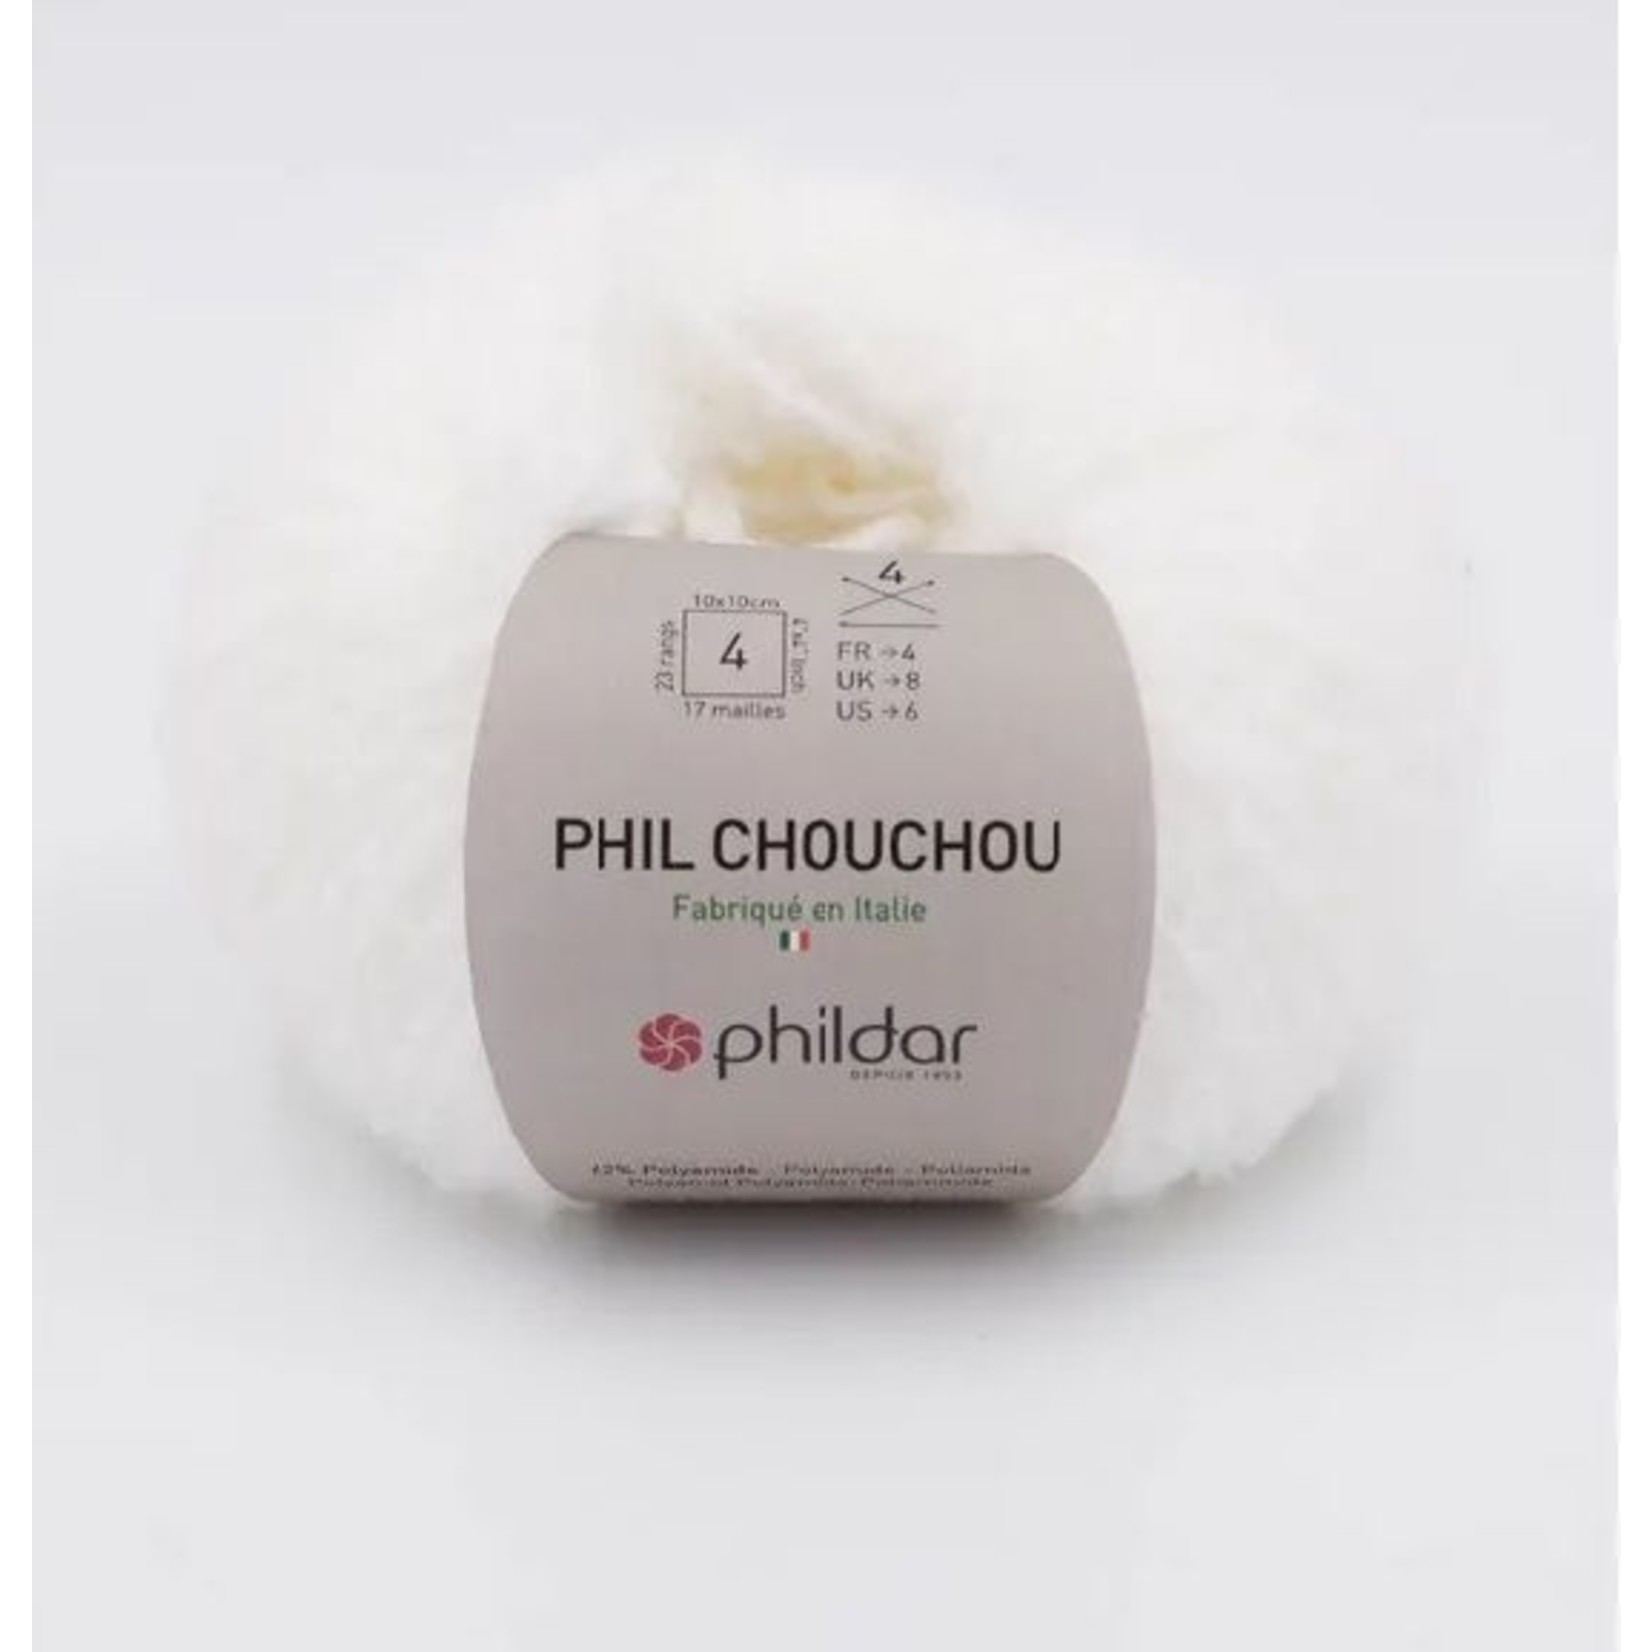 Phildar Phil Chouchou Craie